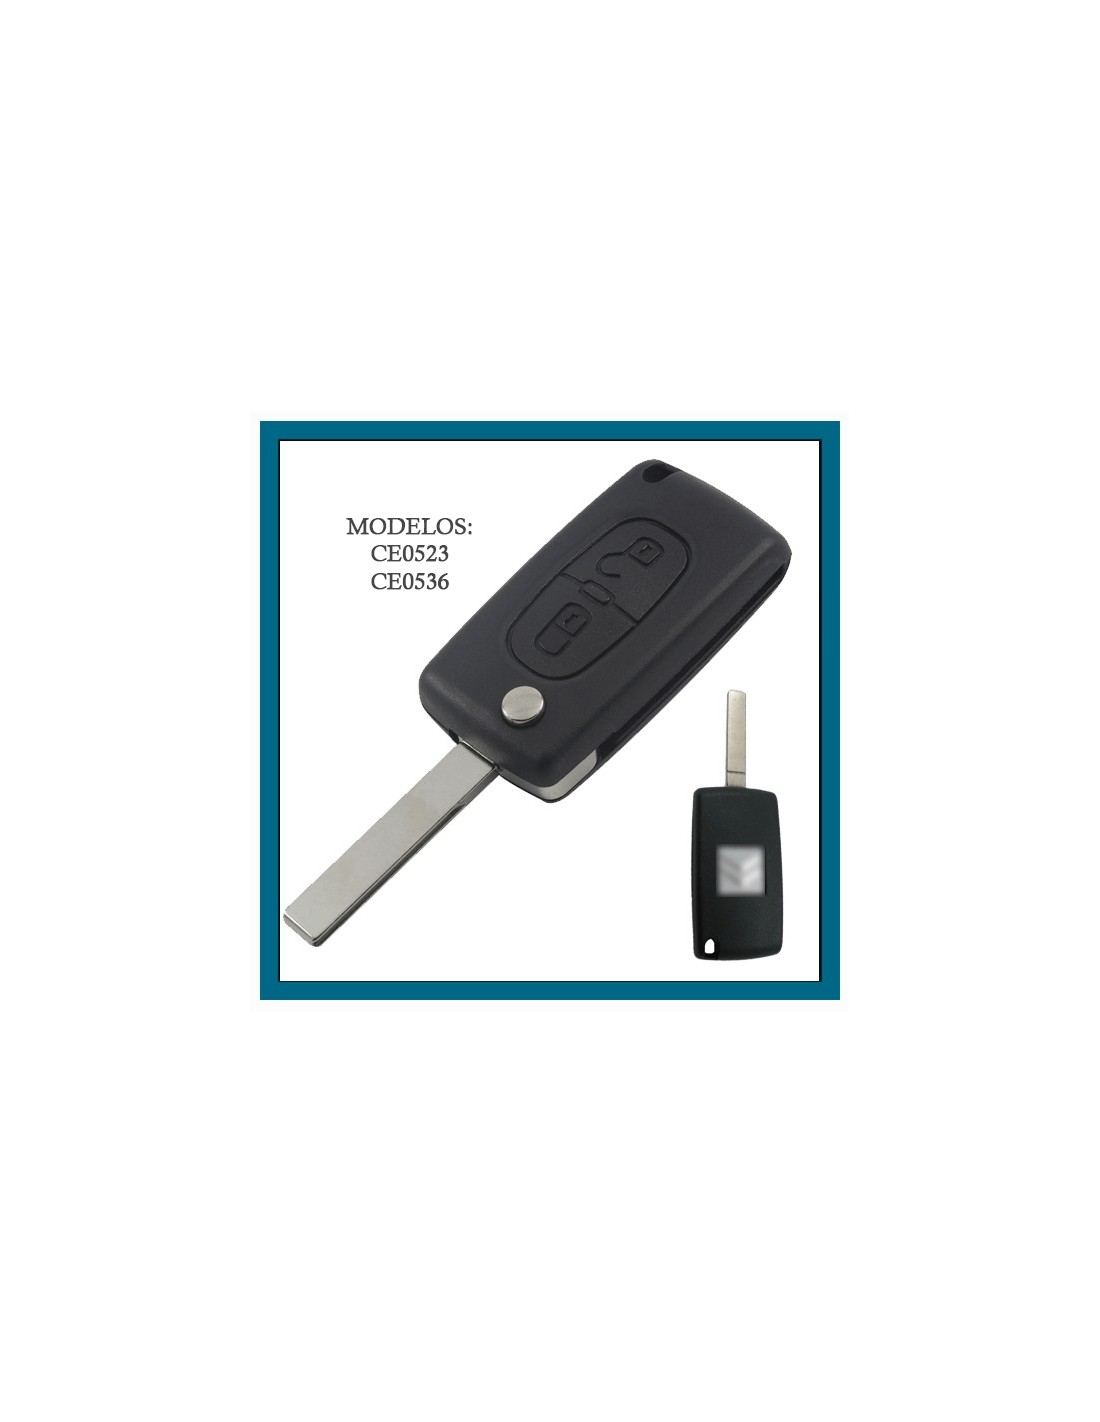 Carcasa llave Citroen 2 Botones MVLLACI001 – Electrónica Visión